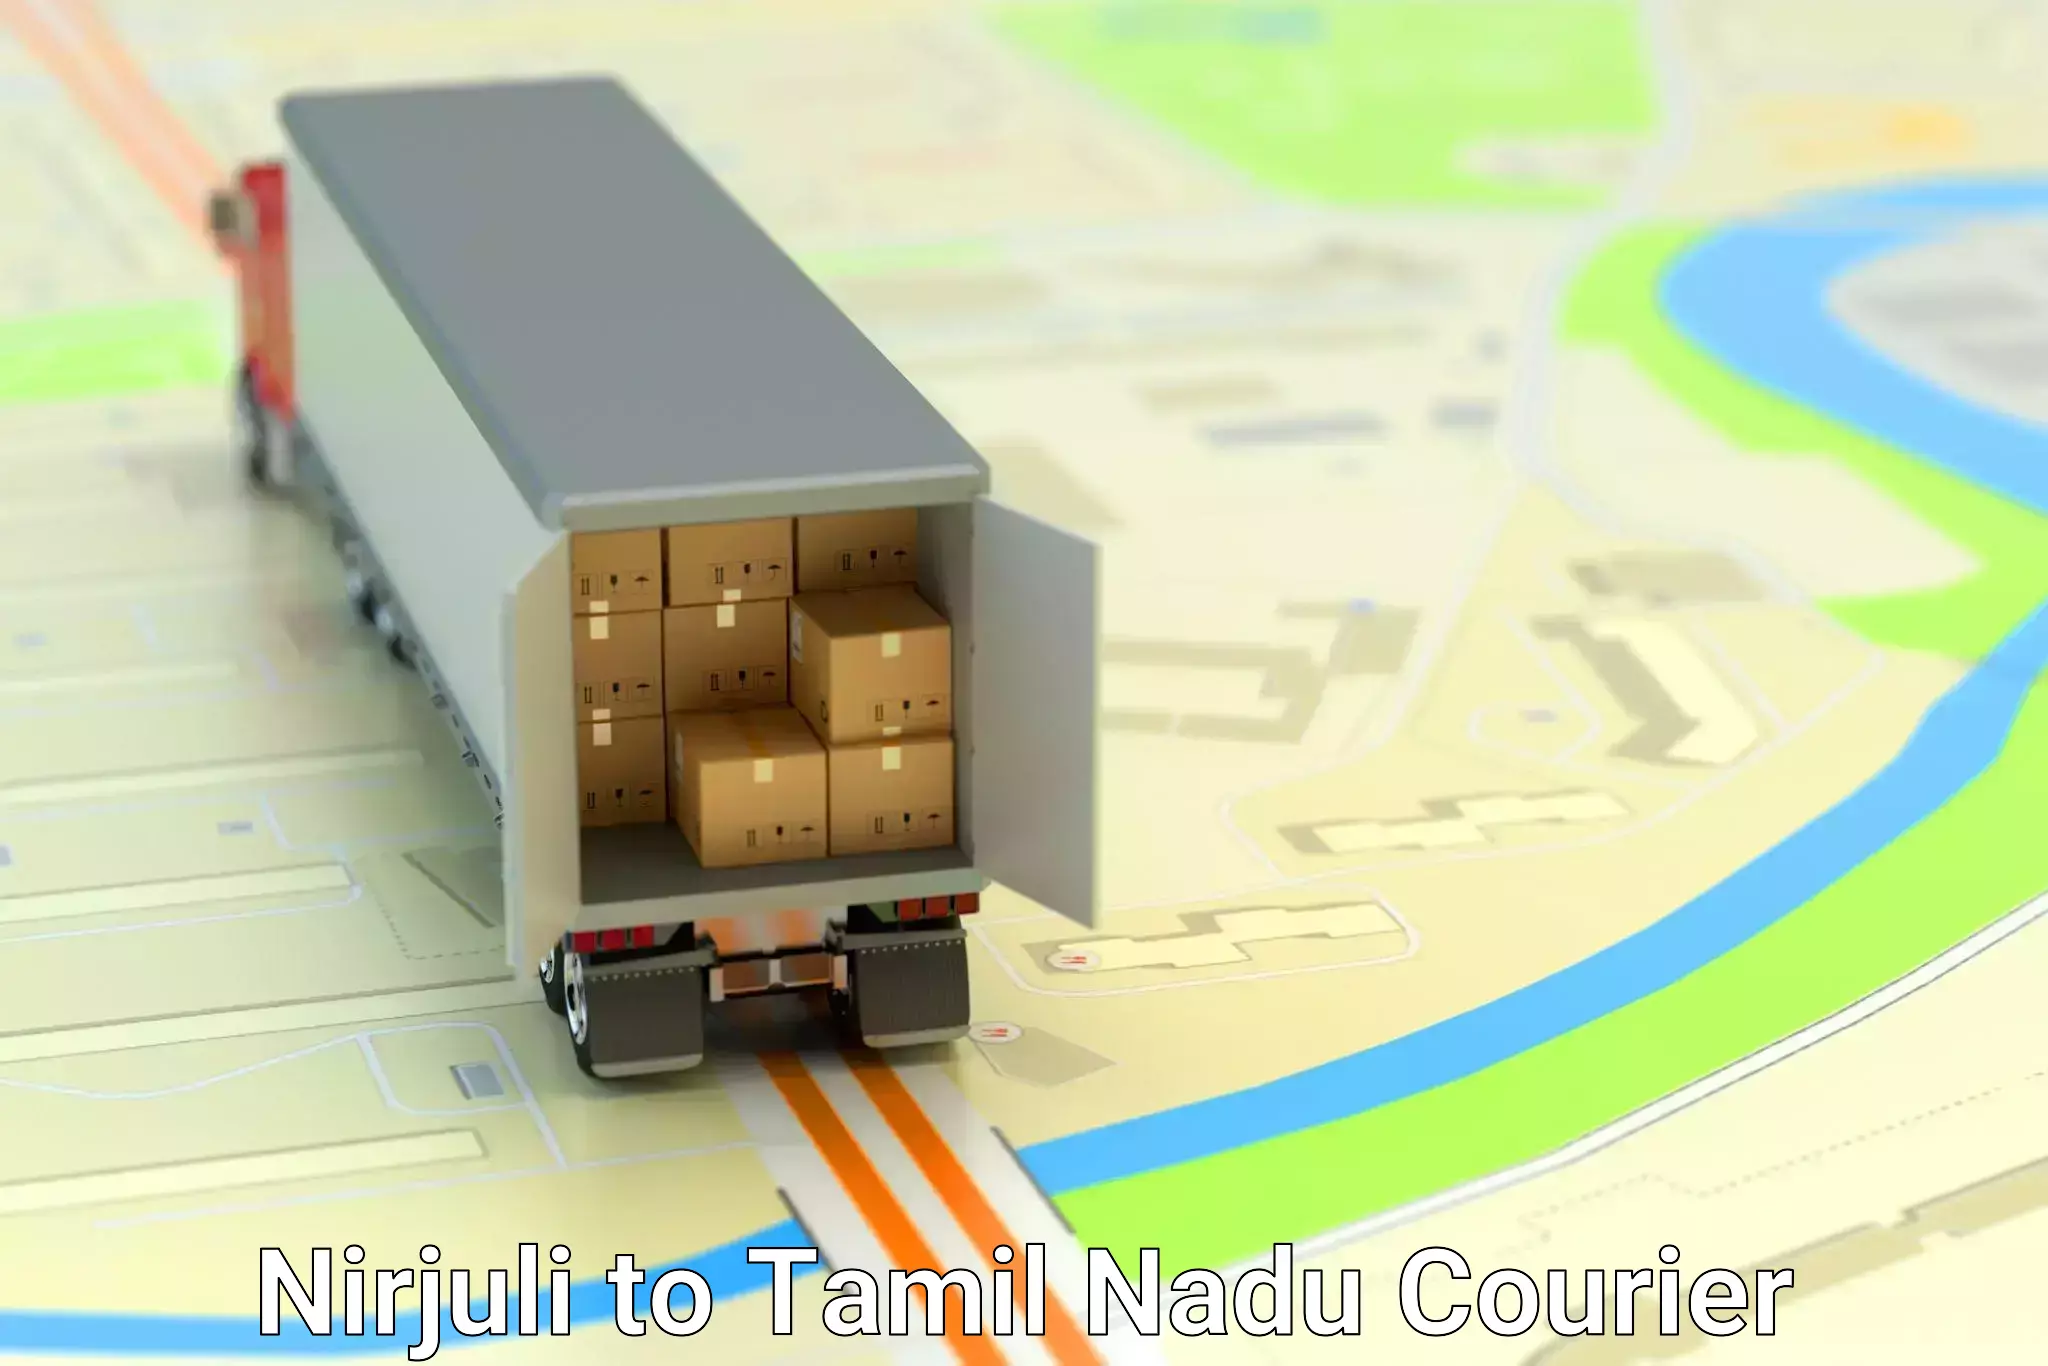 Courier service comparison Nirjuli to Tamil Nadu